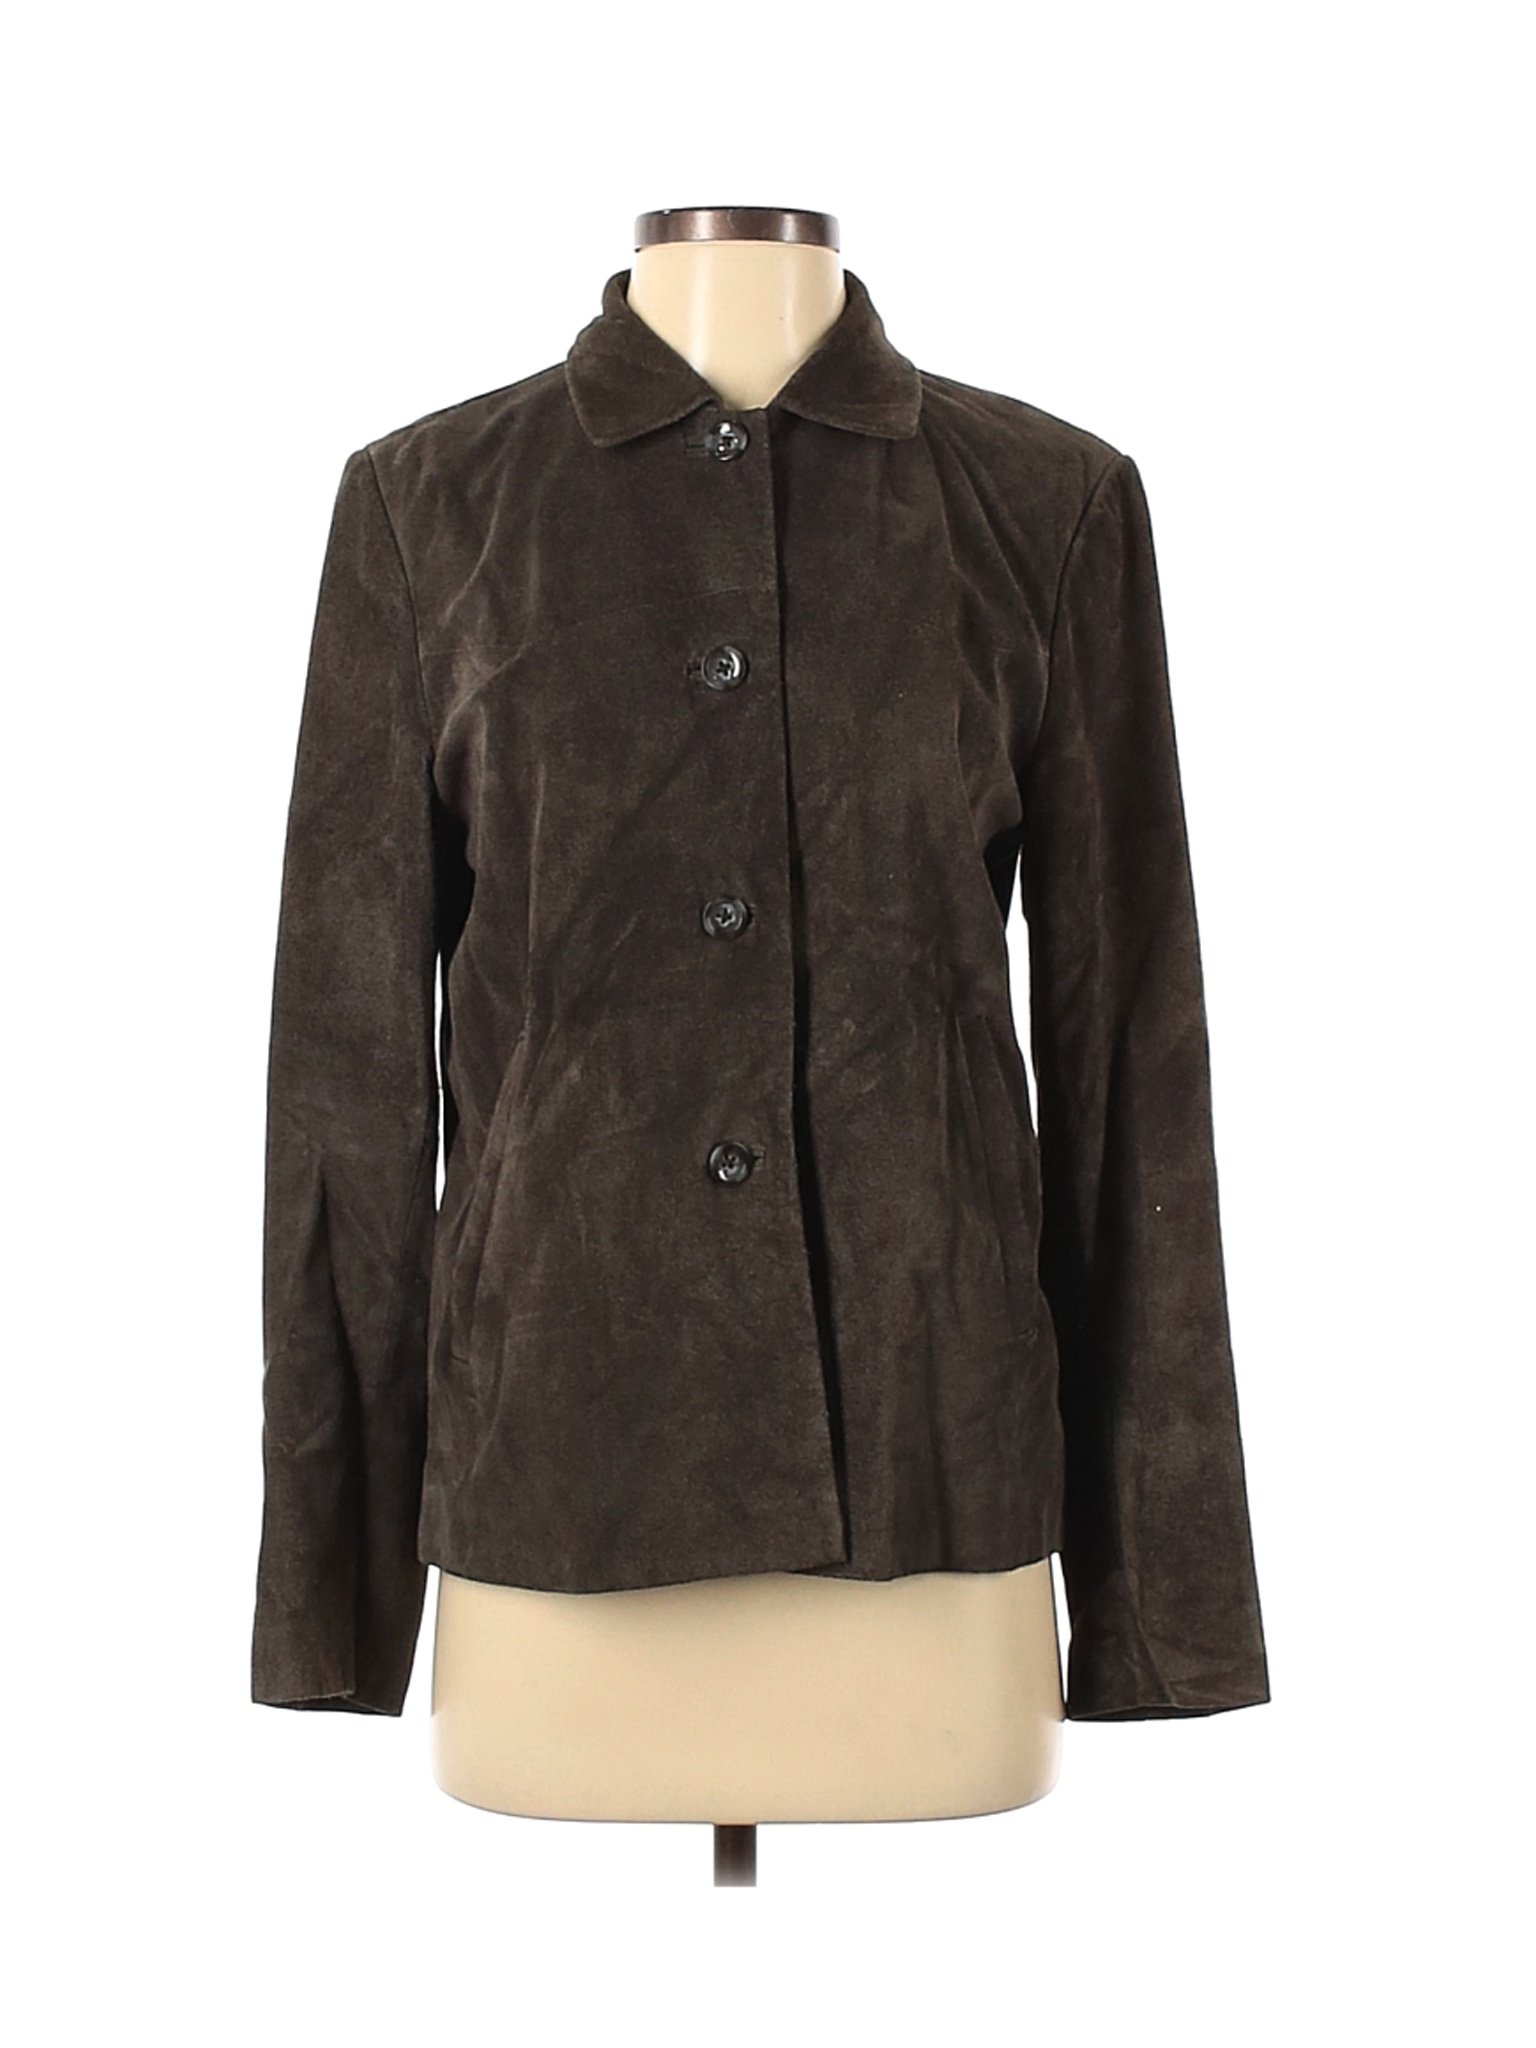 Banana Republic Women Brown Leather Jacket S | eBay